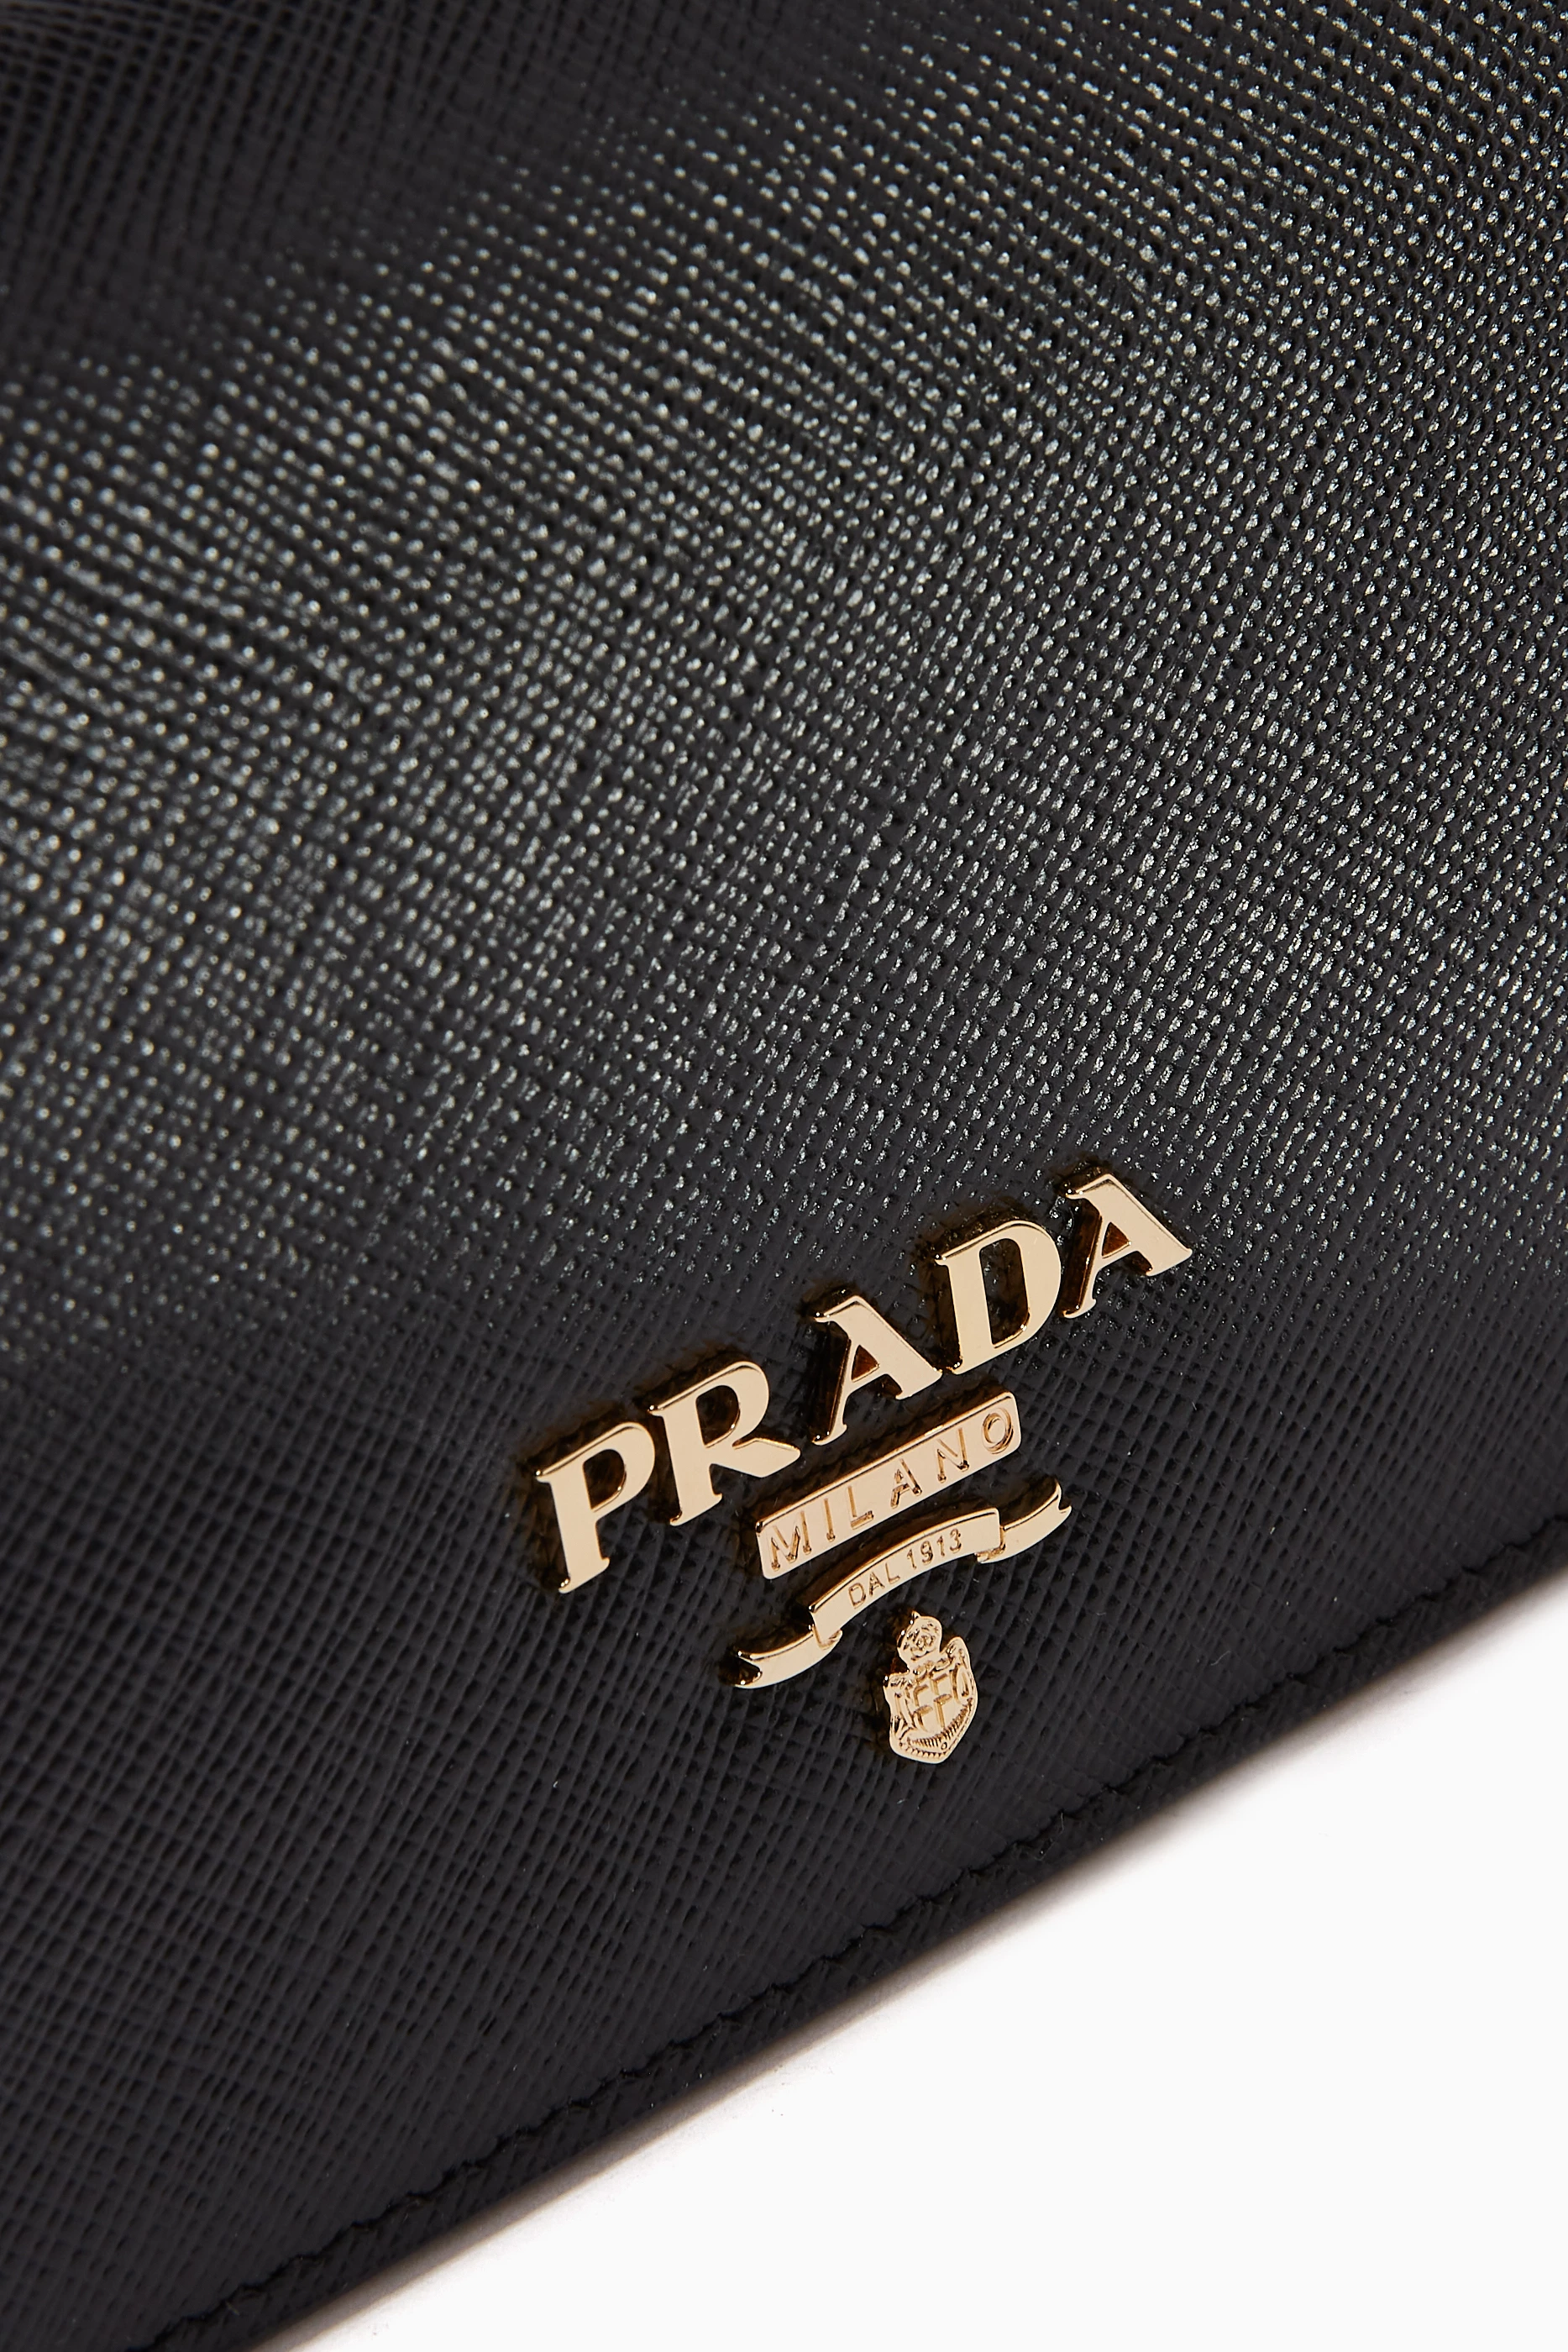 Prada Womens Black Core Saffiano Leather Wallet-on-chain Wallet